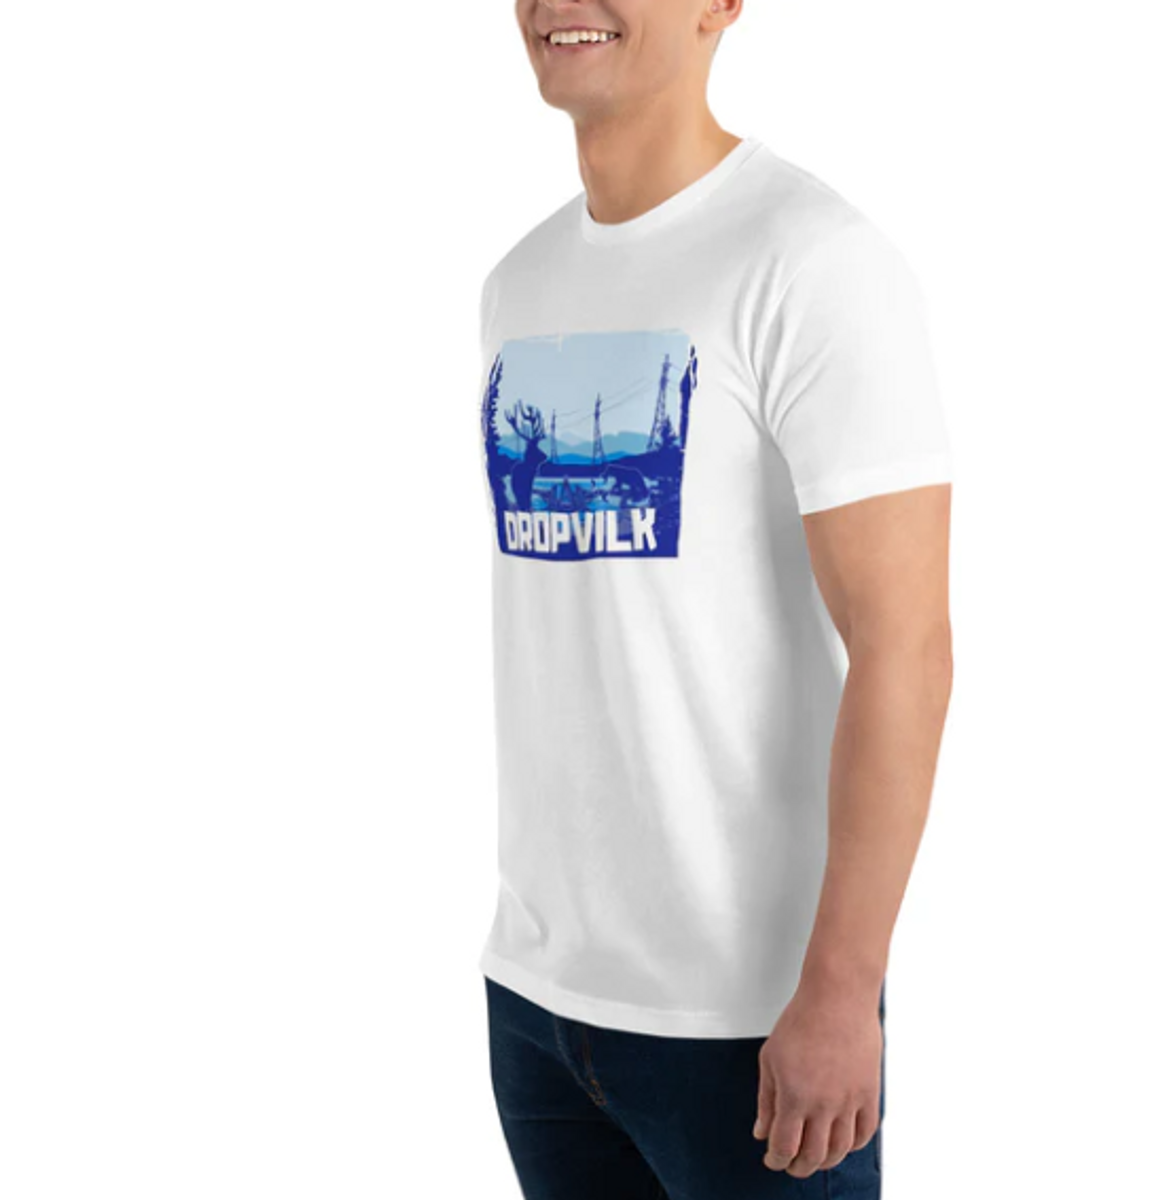 Nome do produto: Camiseta streetwear DropVilk 